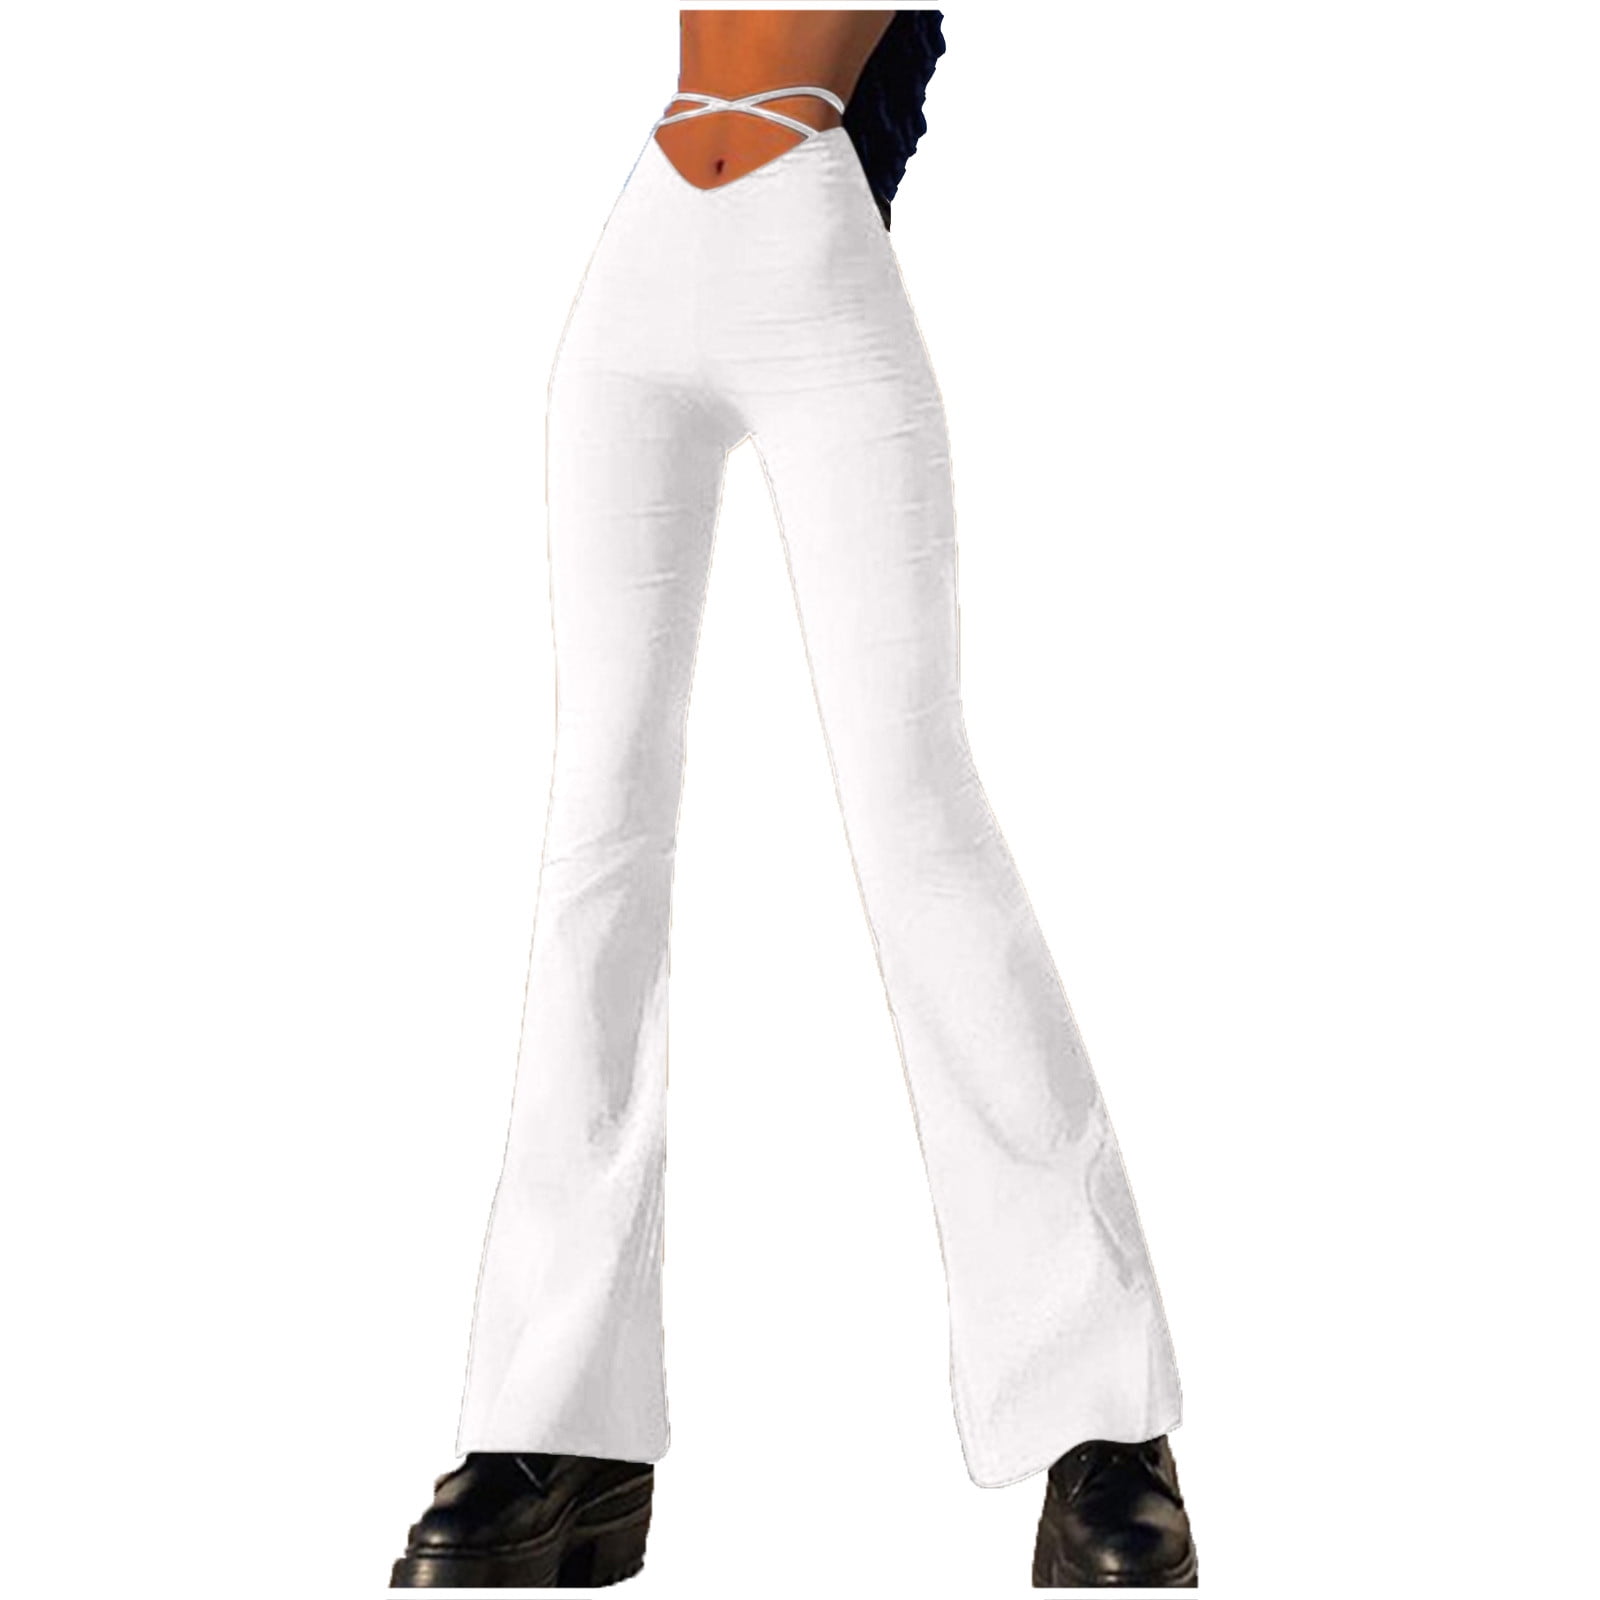 J. METHOD Women's High Waisted Sailor Bell Bottom Elastic Waist Long Pants  Made in USA NEWP44 White 3X 